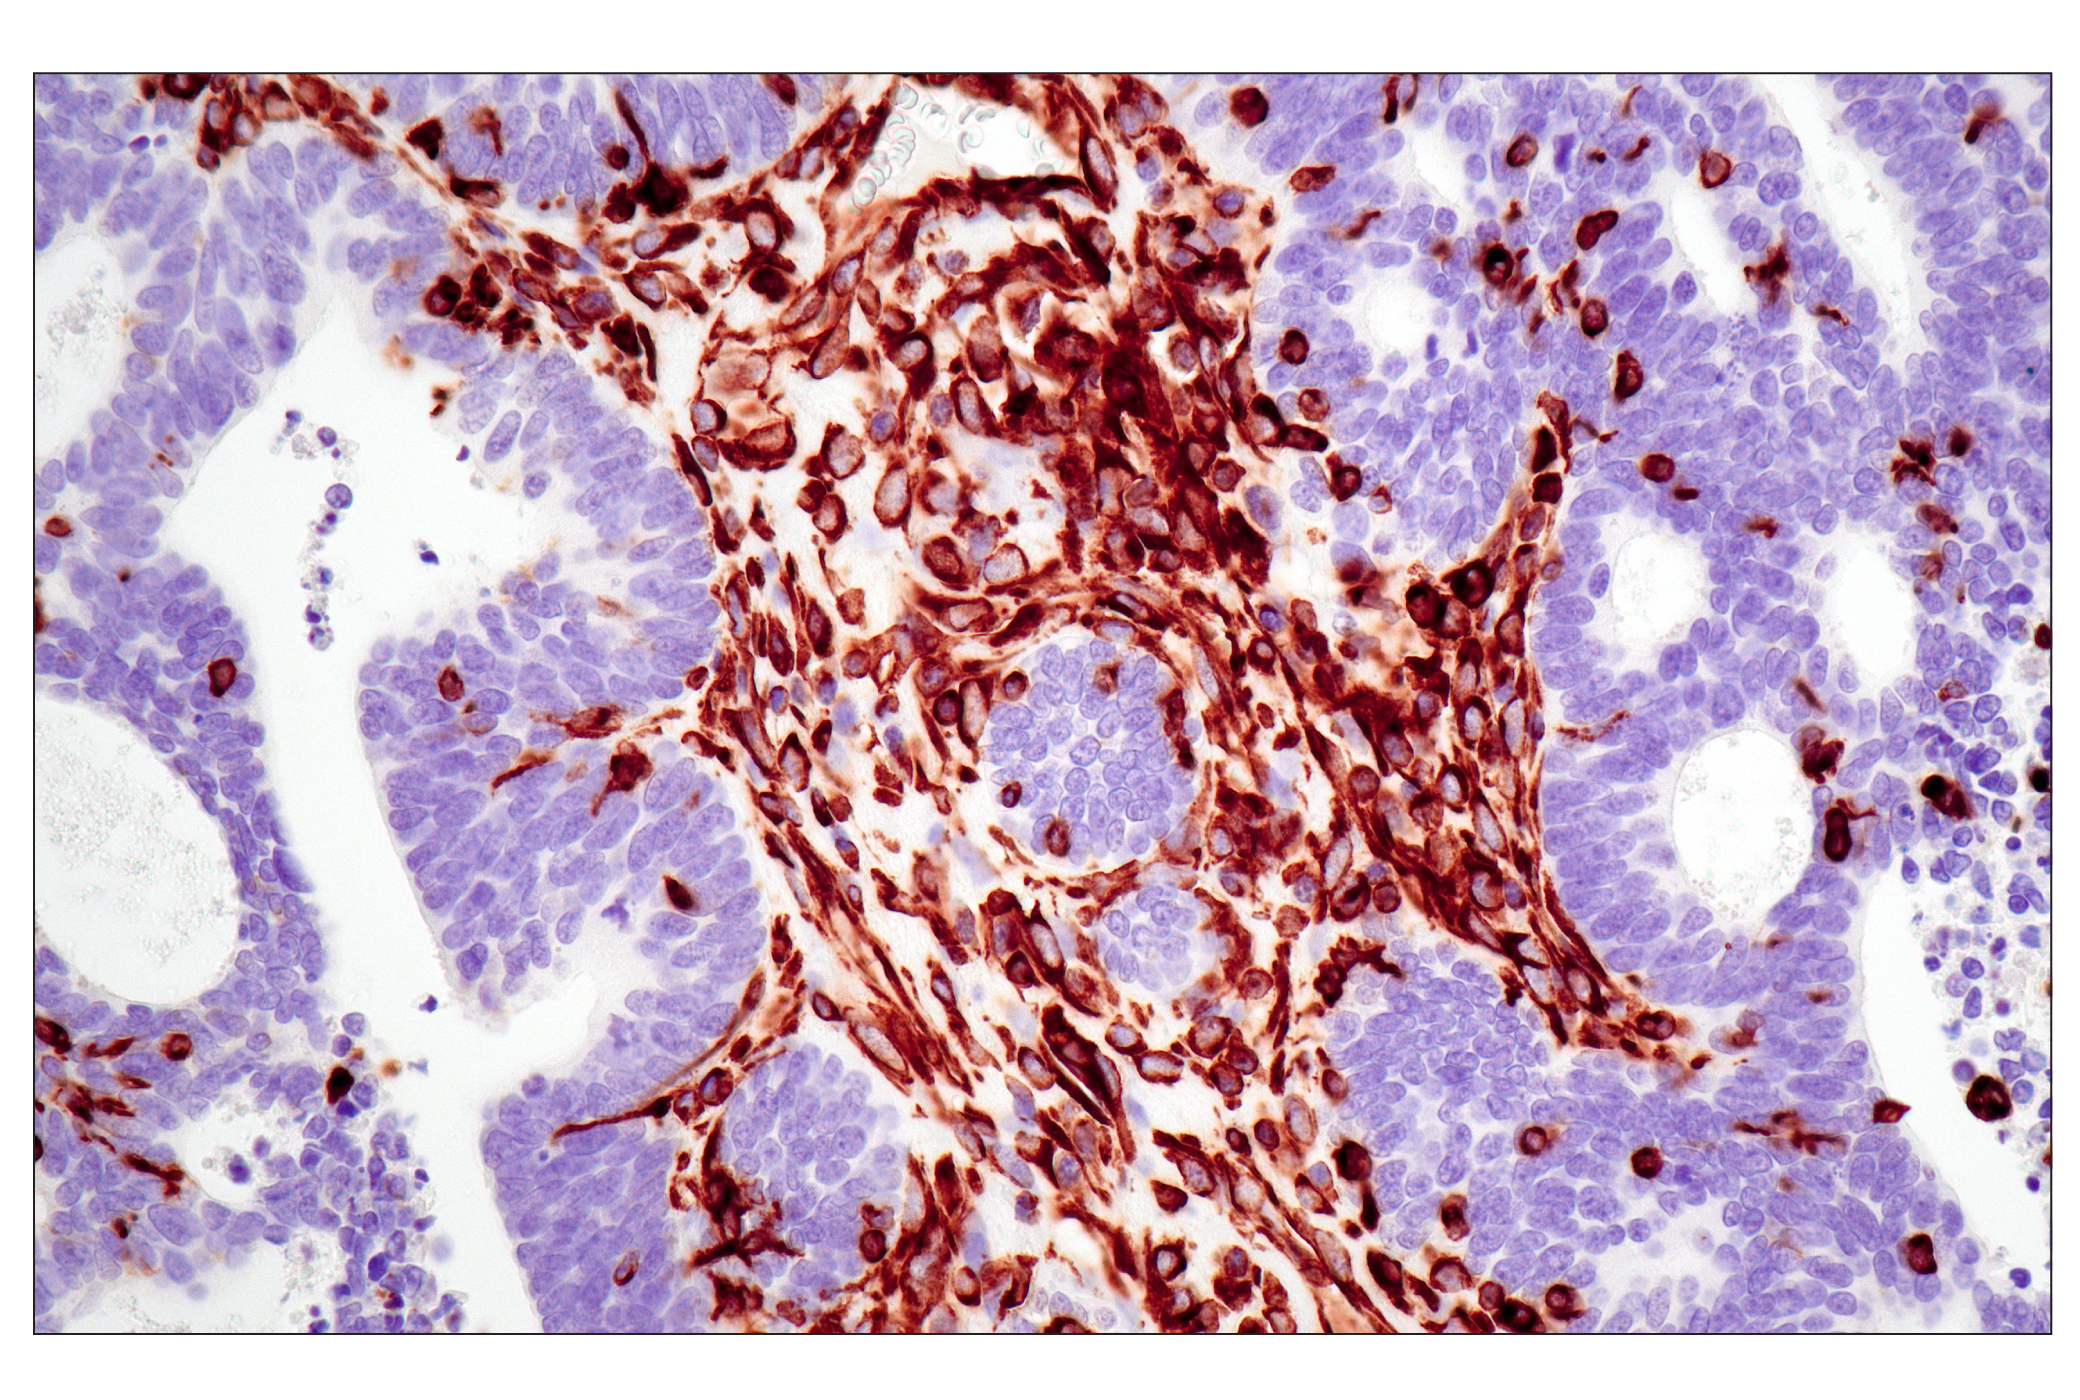  Image 28: Cytoskeletal Marker Antibody Sampler Kit